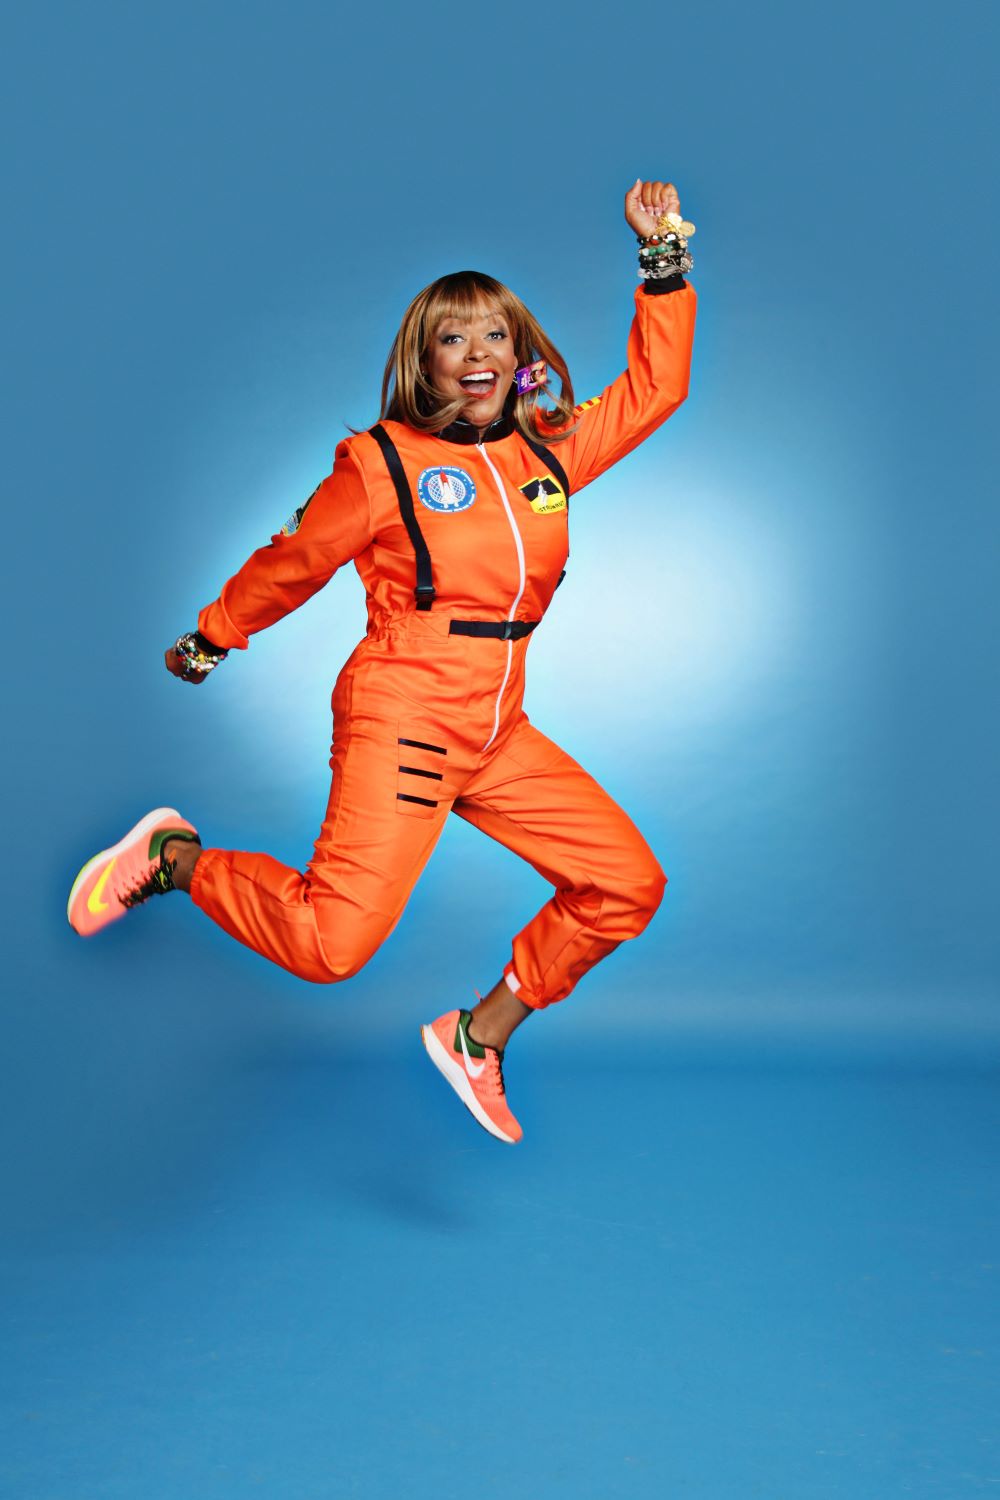 Sharon Caple Mcdougle jumping in orange flight suit